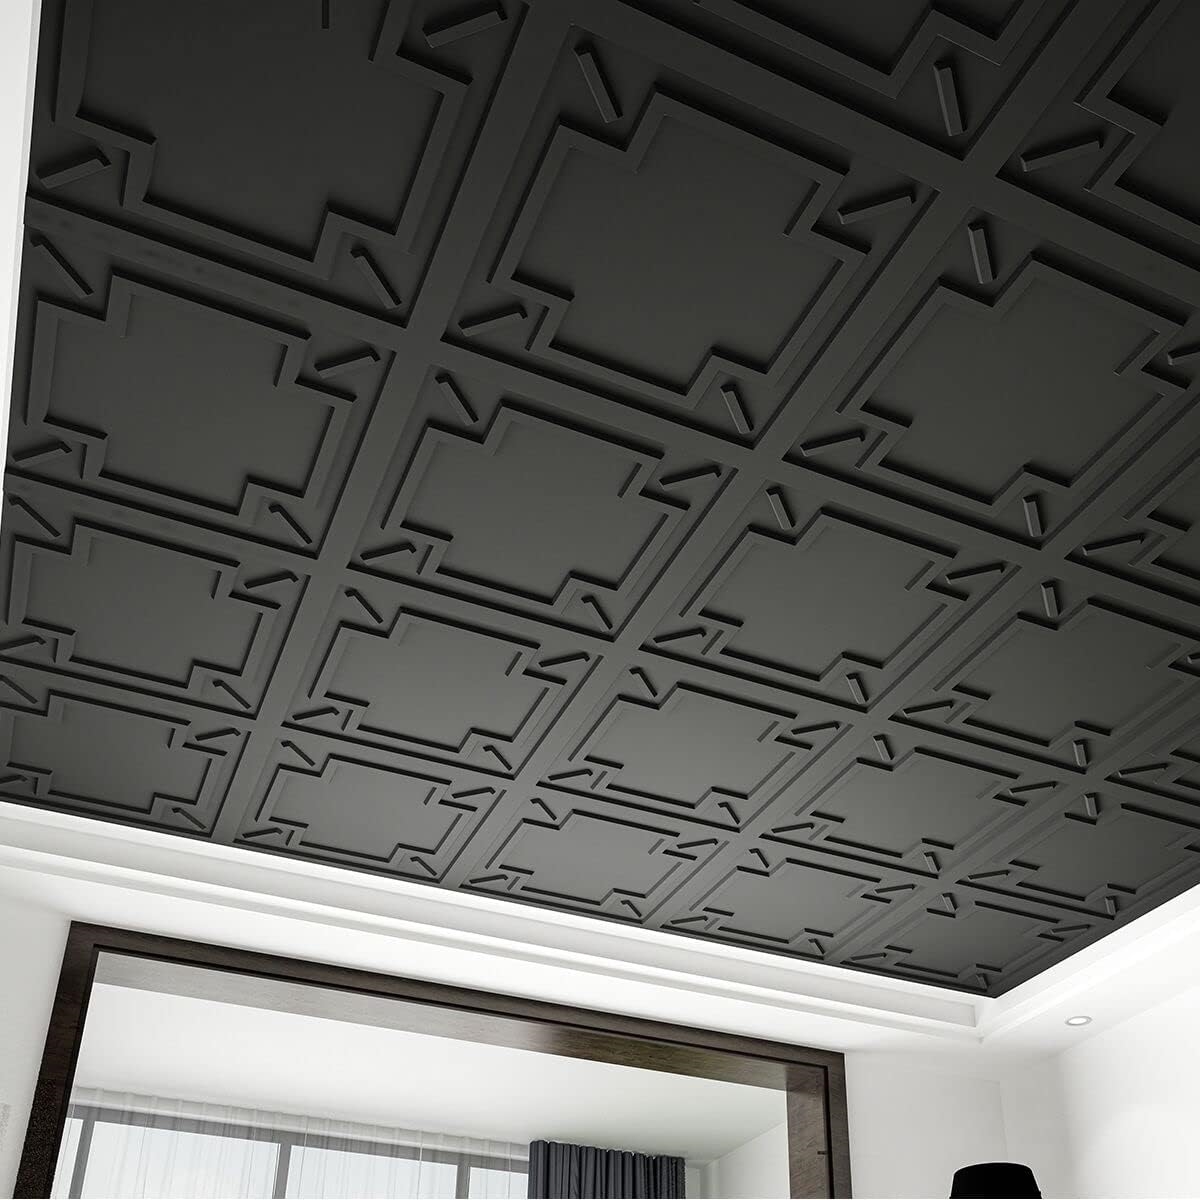 Black drop ceiling design.